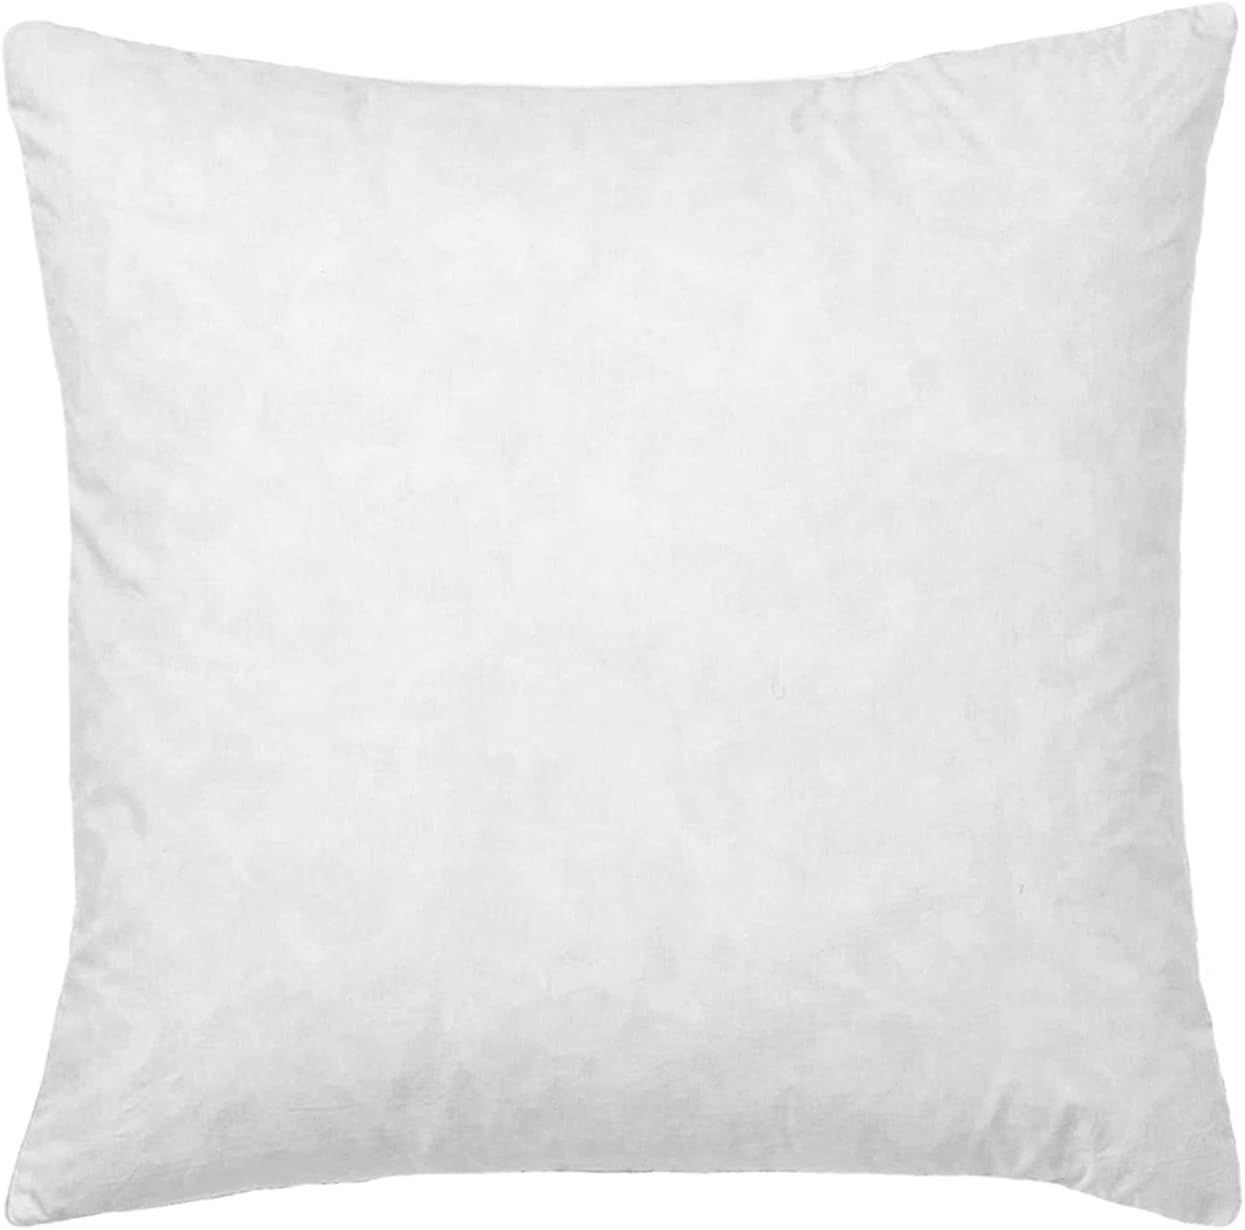 Basic home-28x28 Euro Pillow Insert, Soft Decorative Down Feather Pillow Stuffer, Premium White C... | Amazon (US)